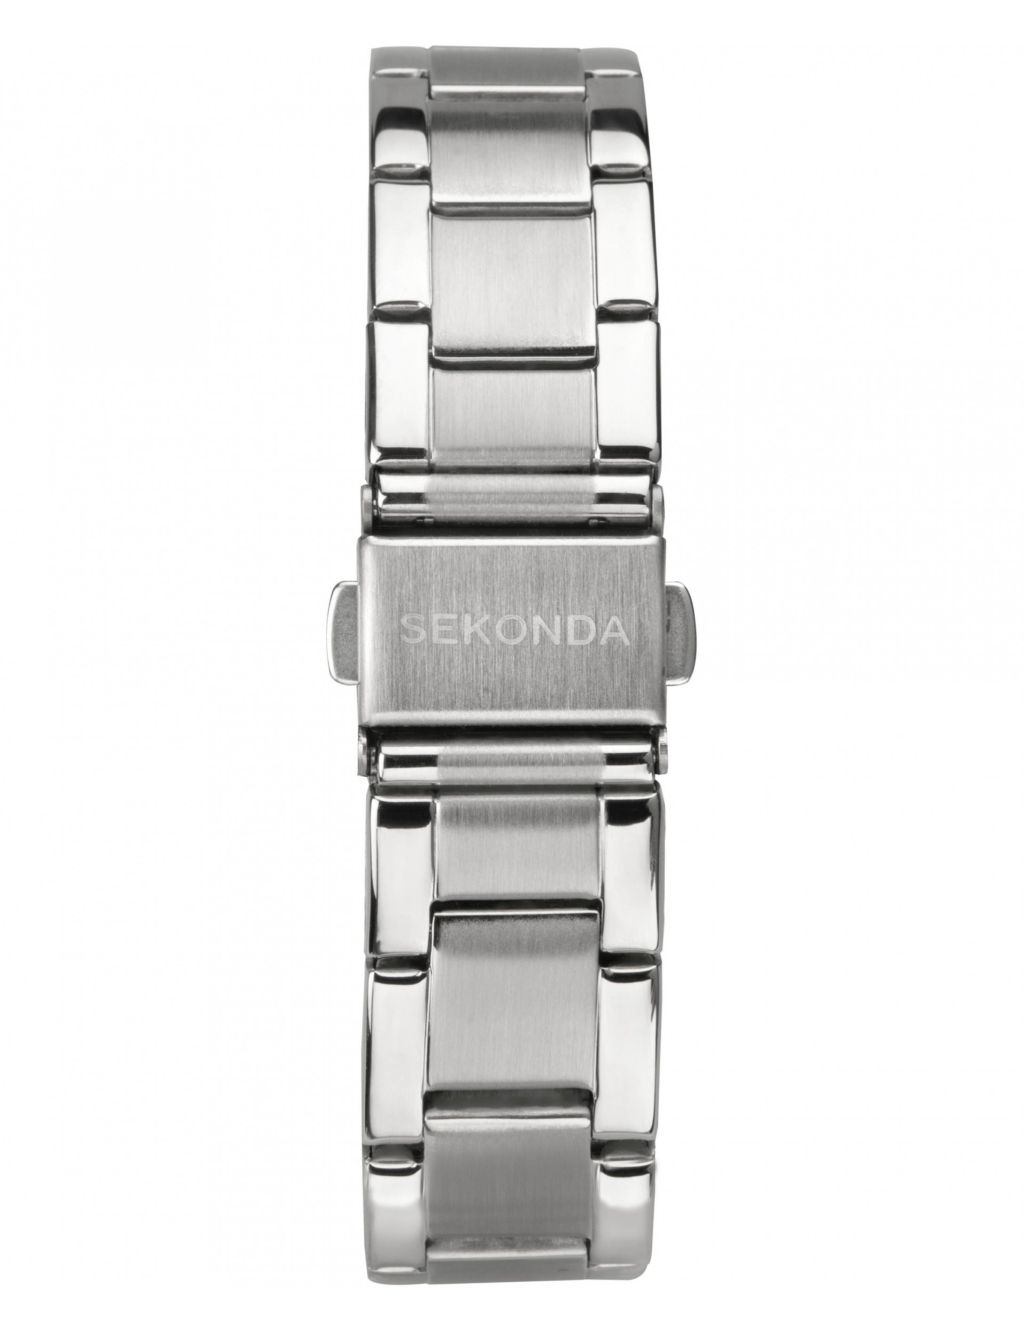 Sekonda Silver Stainless Steel Quartz Watch image 2